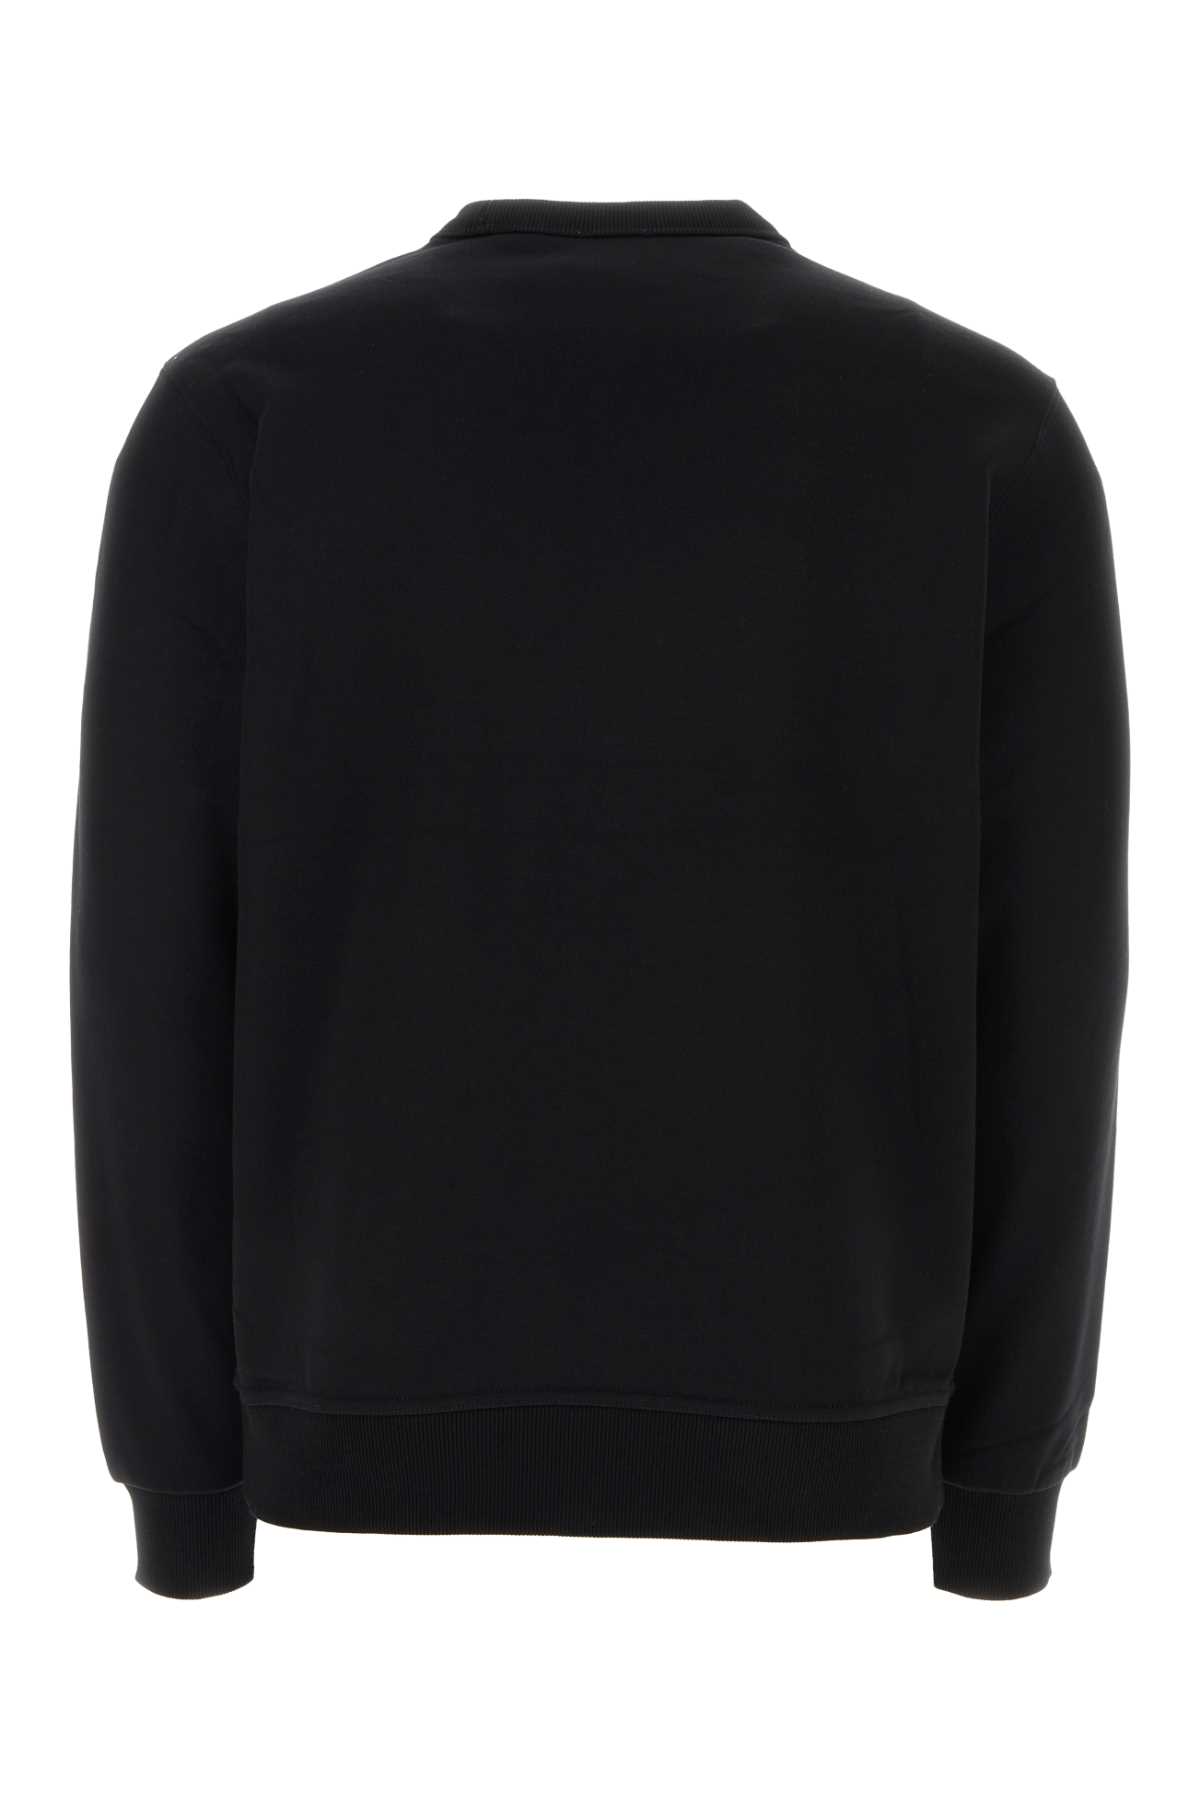 Burberry Black Stretch Cotton Oversize Sweater